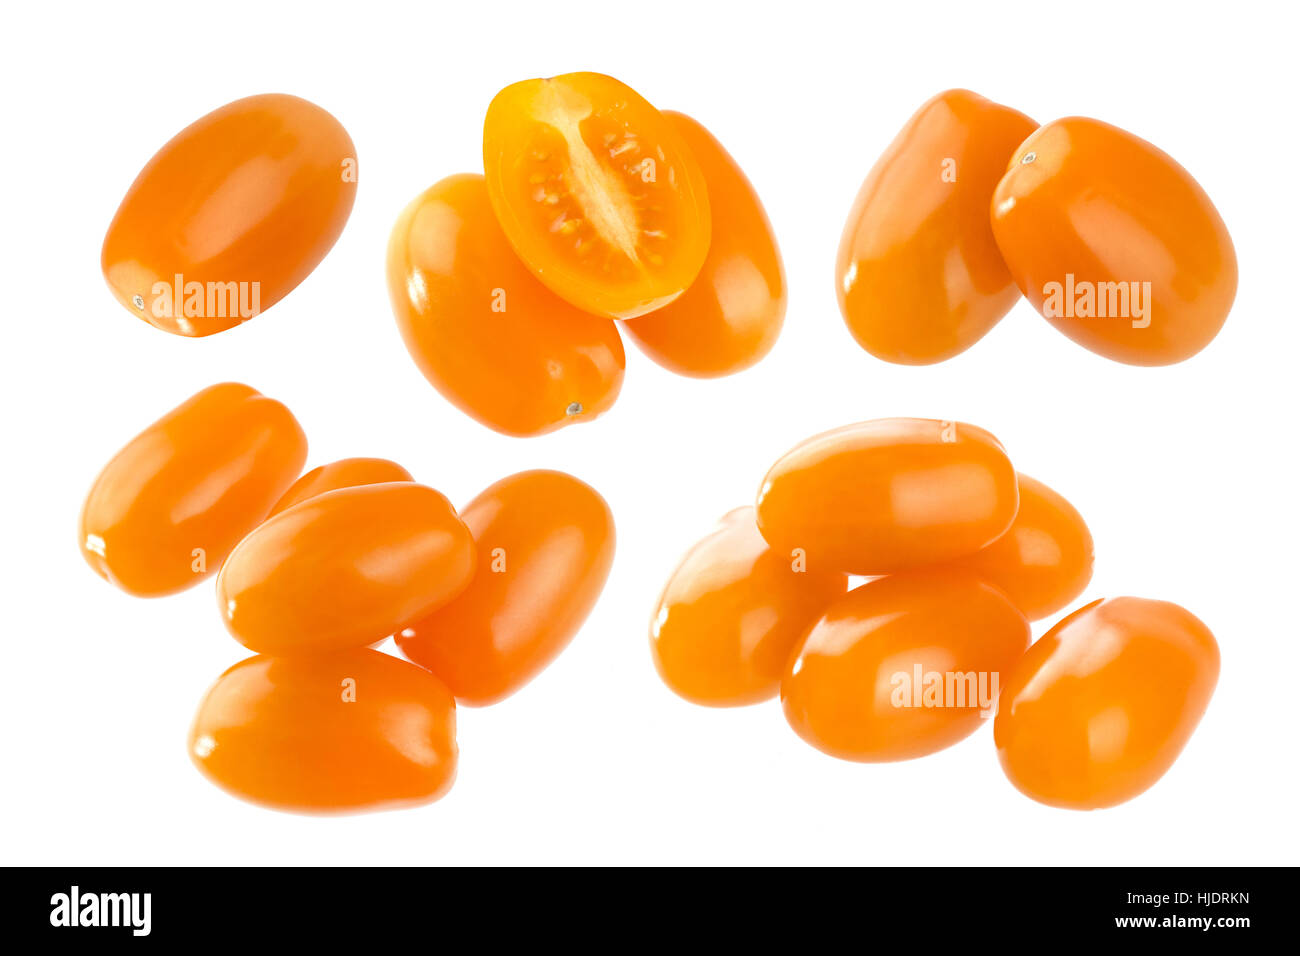 Cherry tomatoes isolated on white background Stock Photo